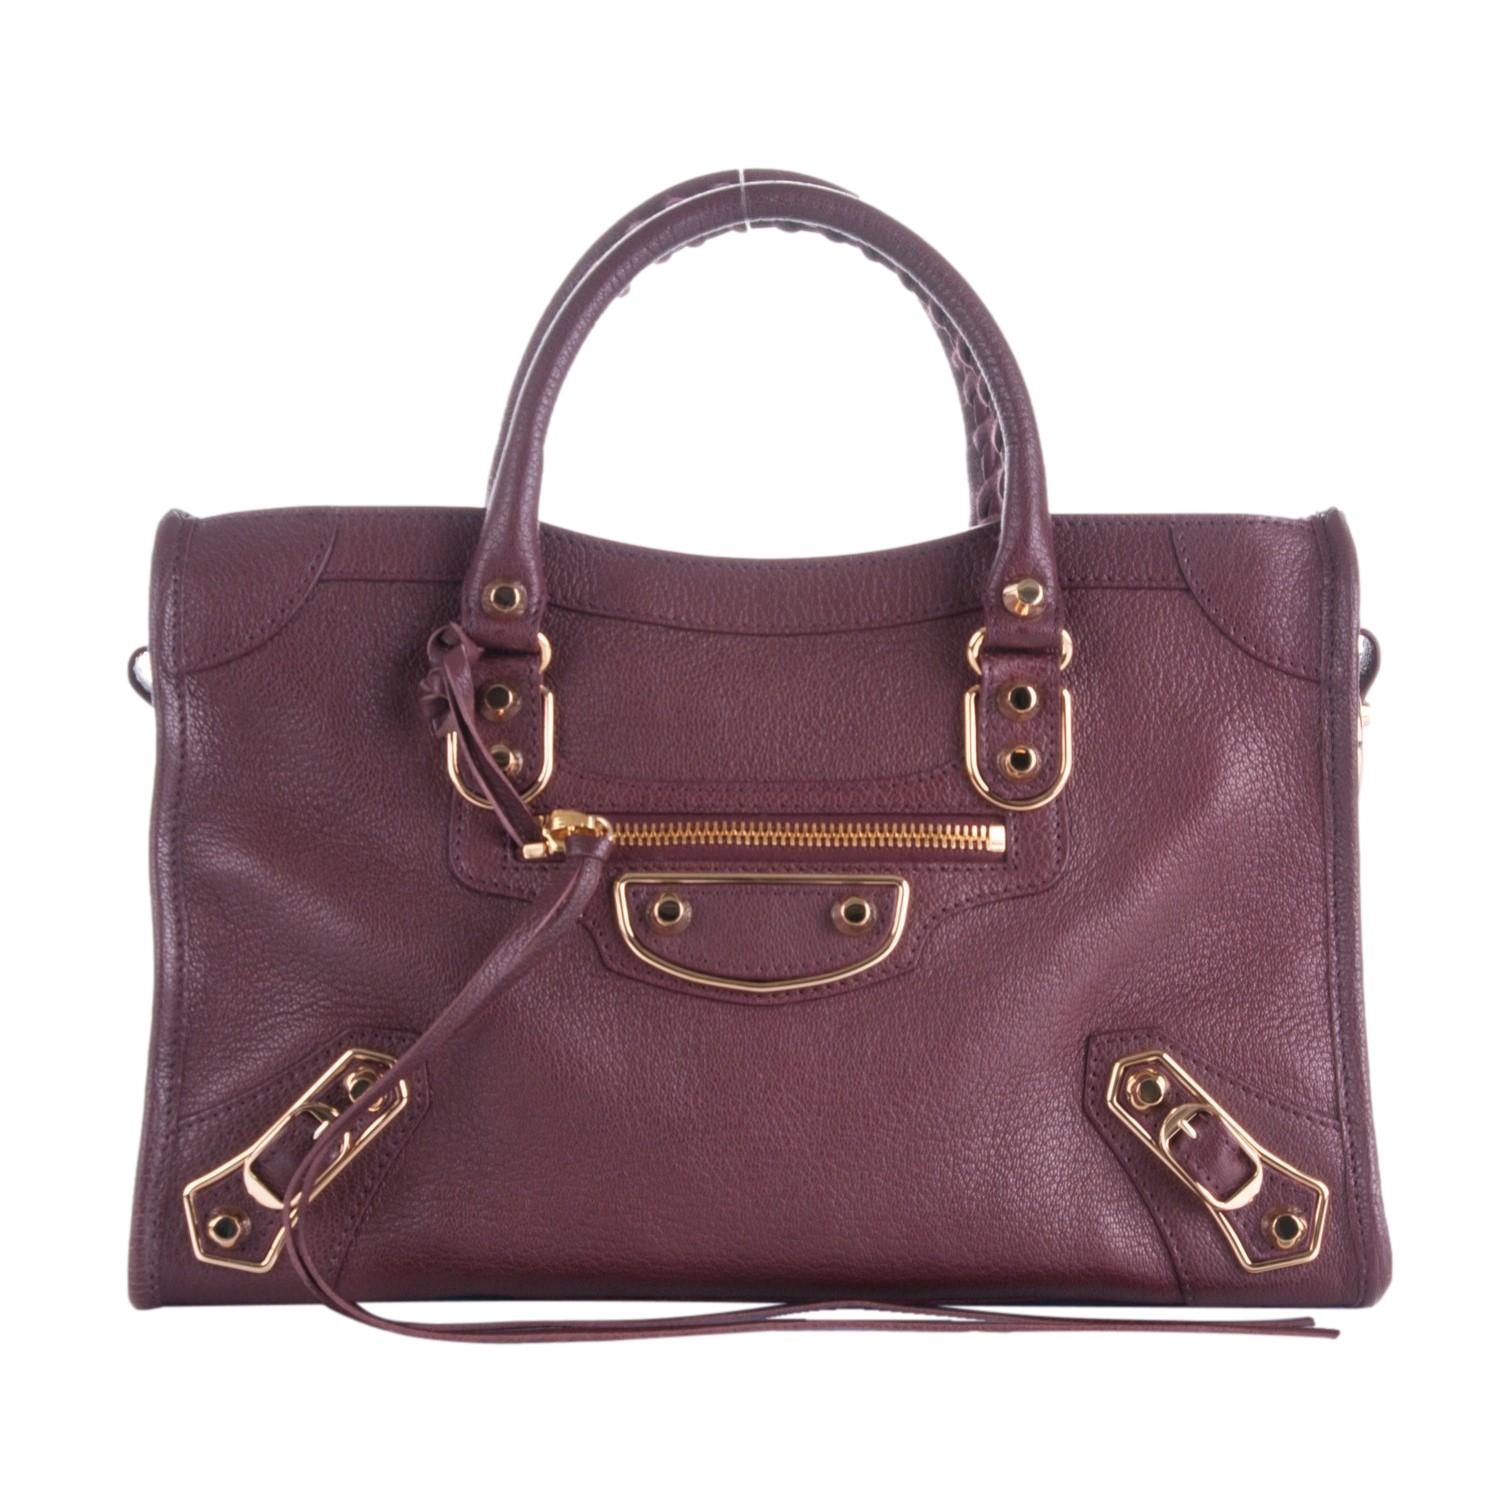 Balenciaga City Prune Purple Goat Leather Small Shoulder Bag - LUXURYMRKT